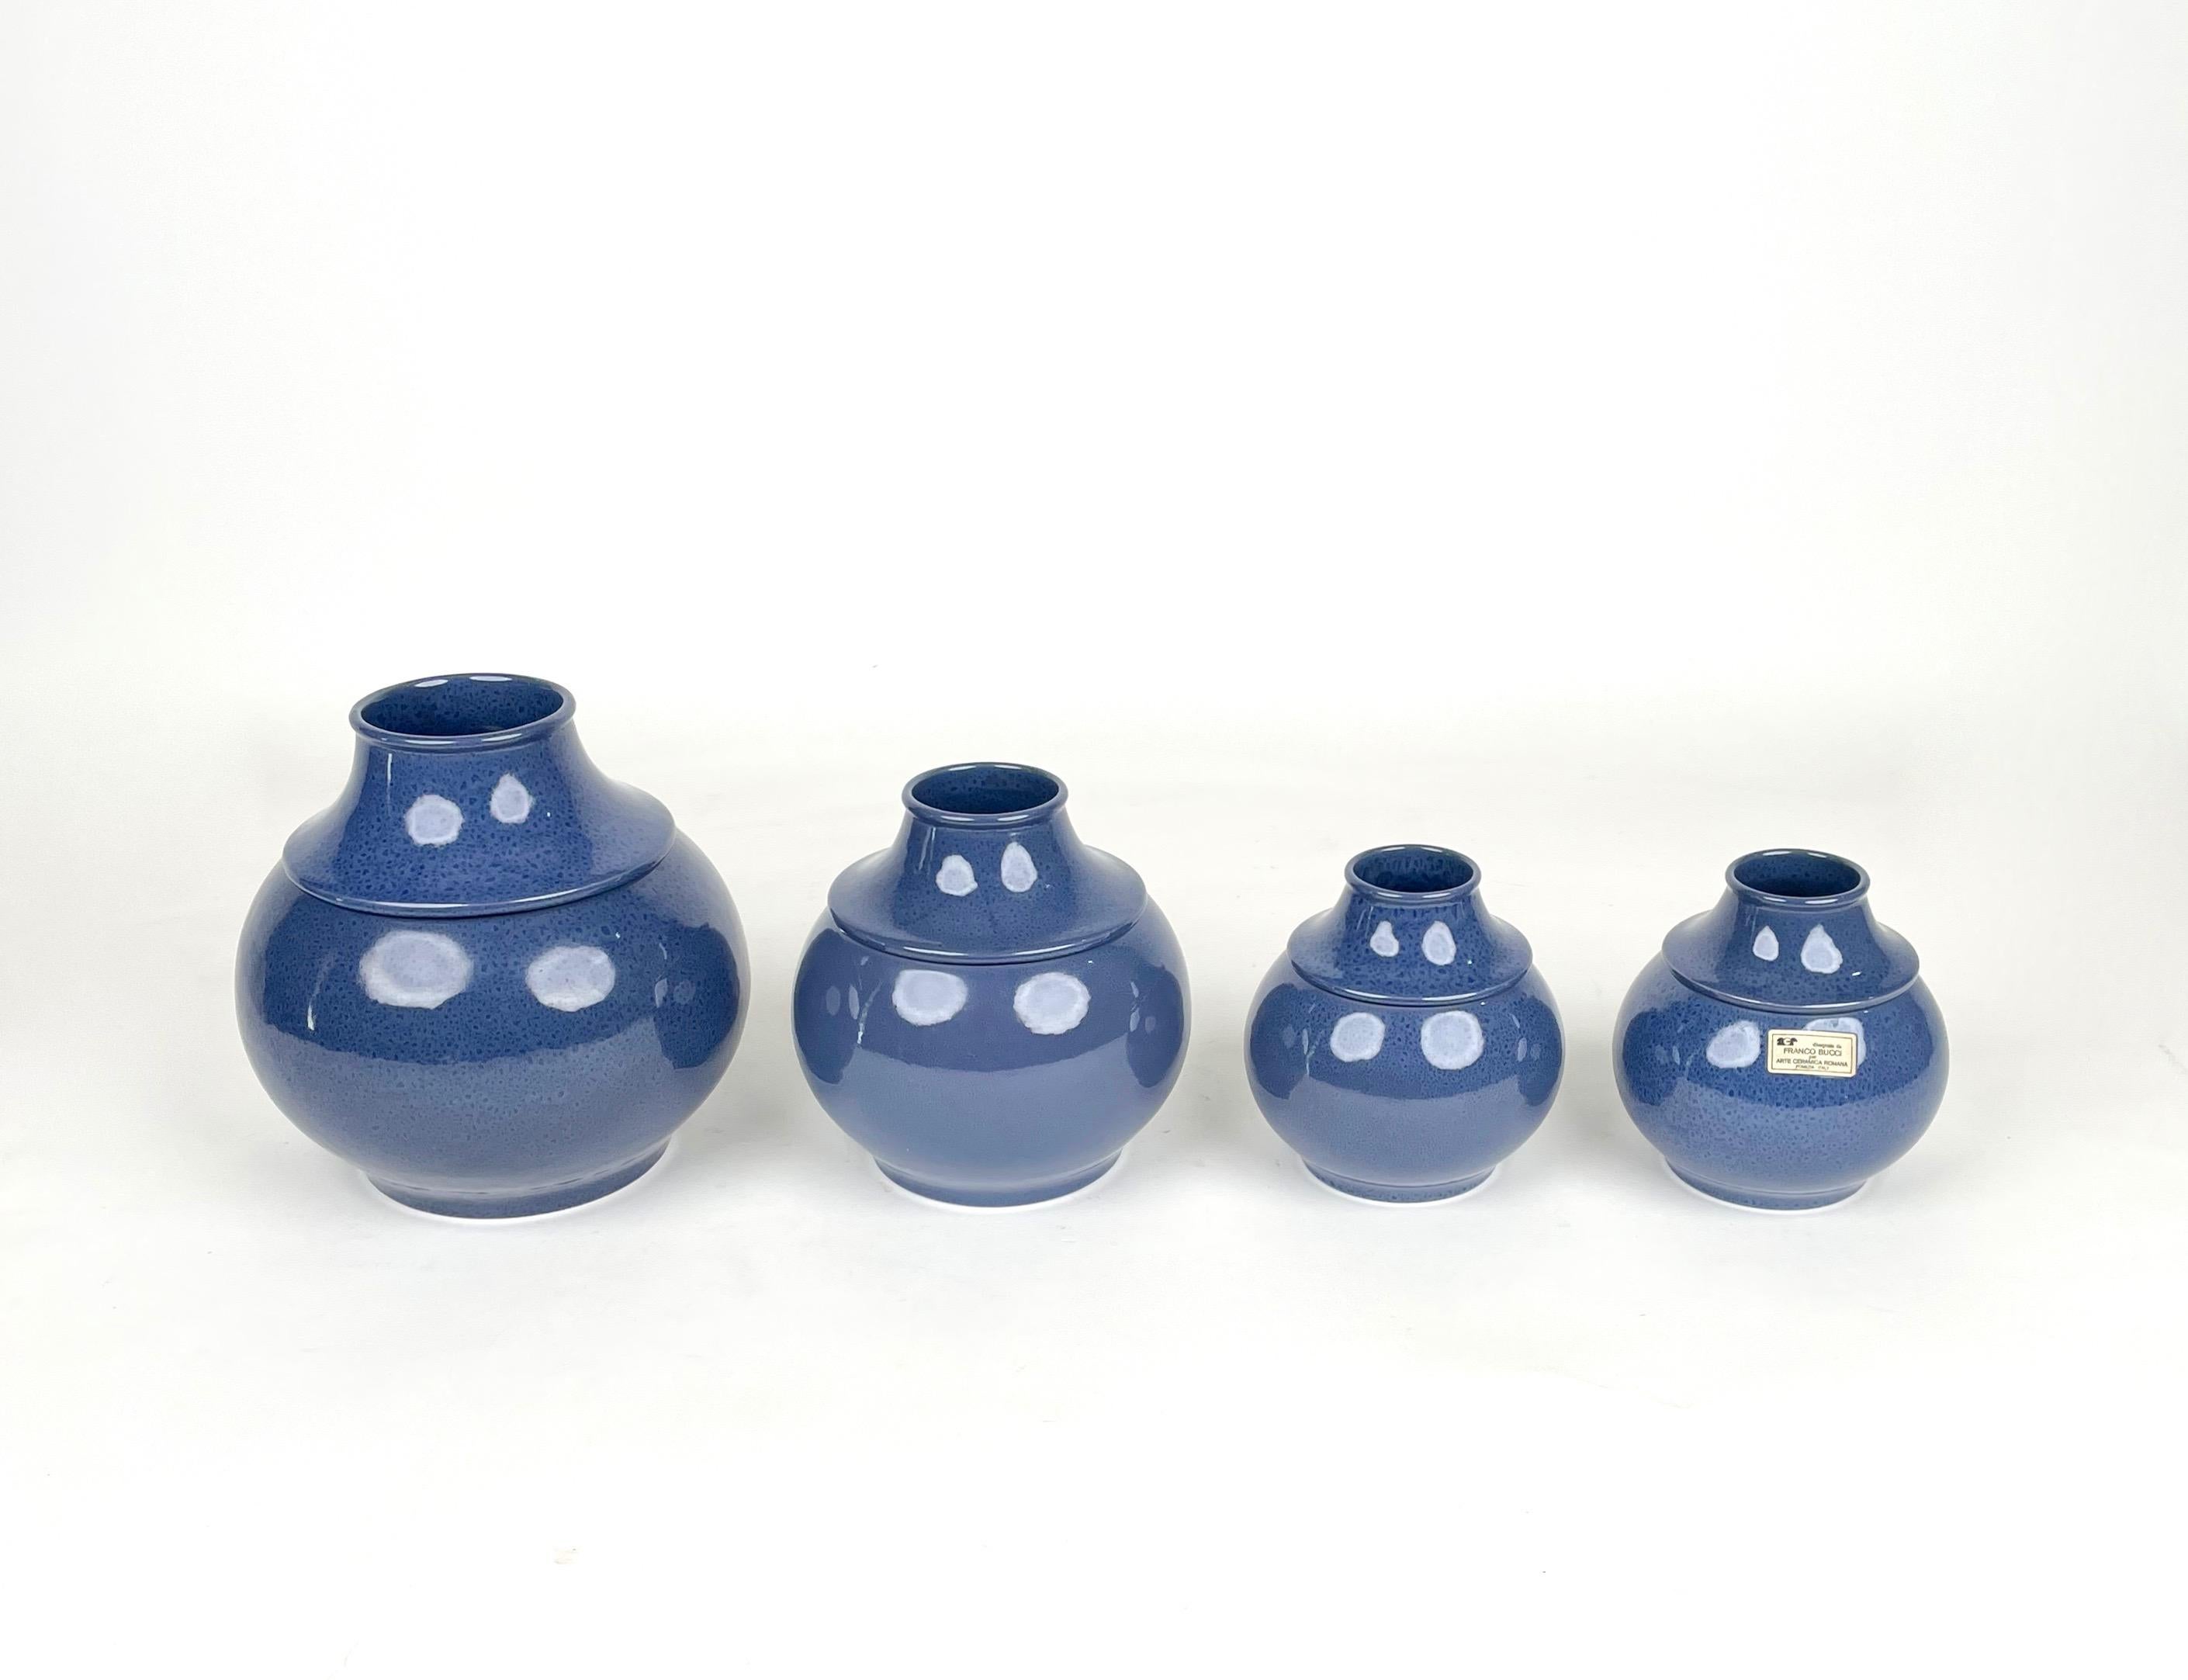 Set of four ceramic vases in decrescent sizes by Franco Bucci for Arte Ceramica Romana made in Italy in the 1970s. 

Dimensions:
Vase 1: 22cm height 22cm diameter 
Vade 2: 19cm height 18cm diameter
Vase 3: 15cm height 13cm diameter 
Vase 4: